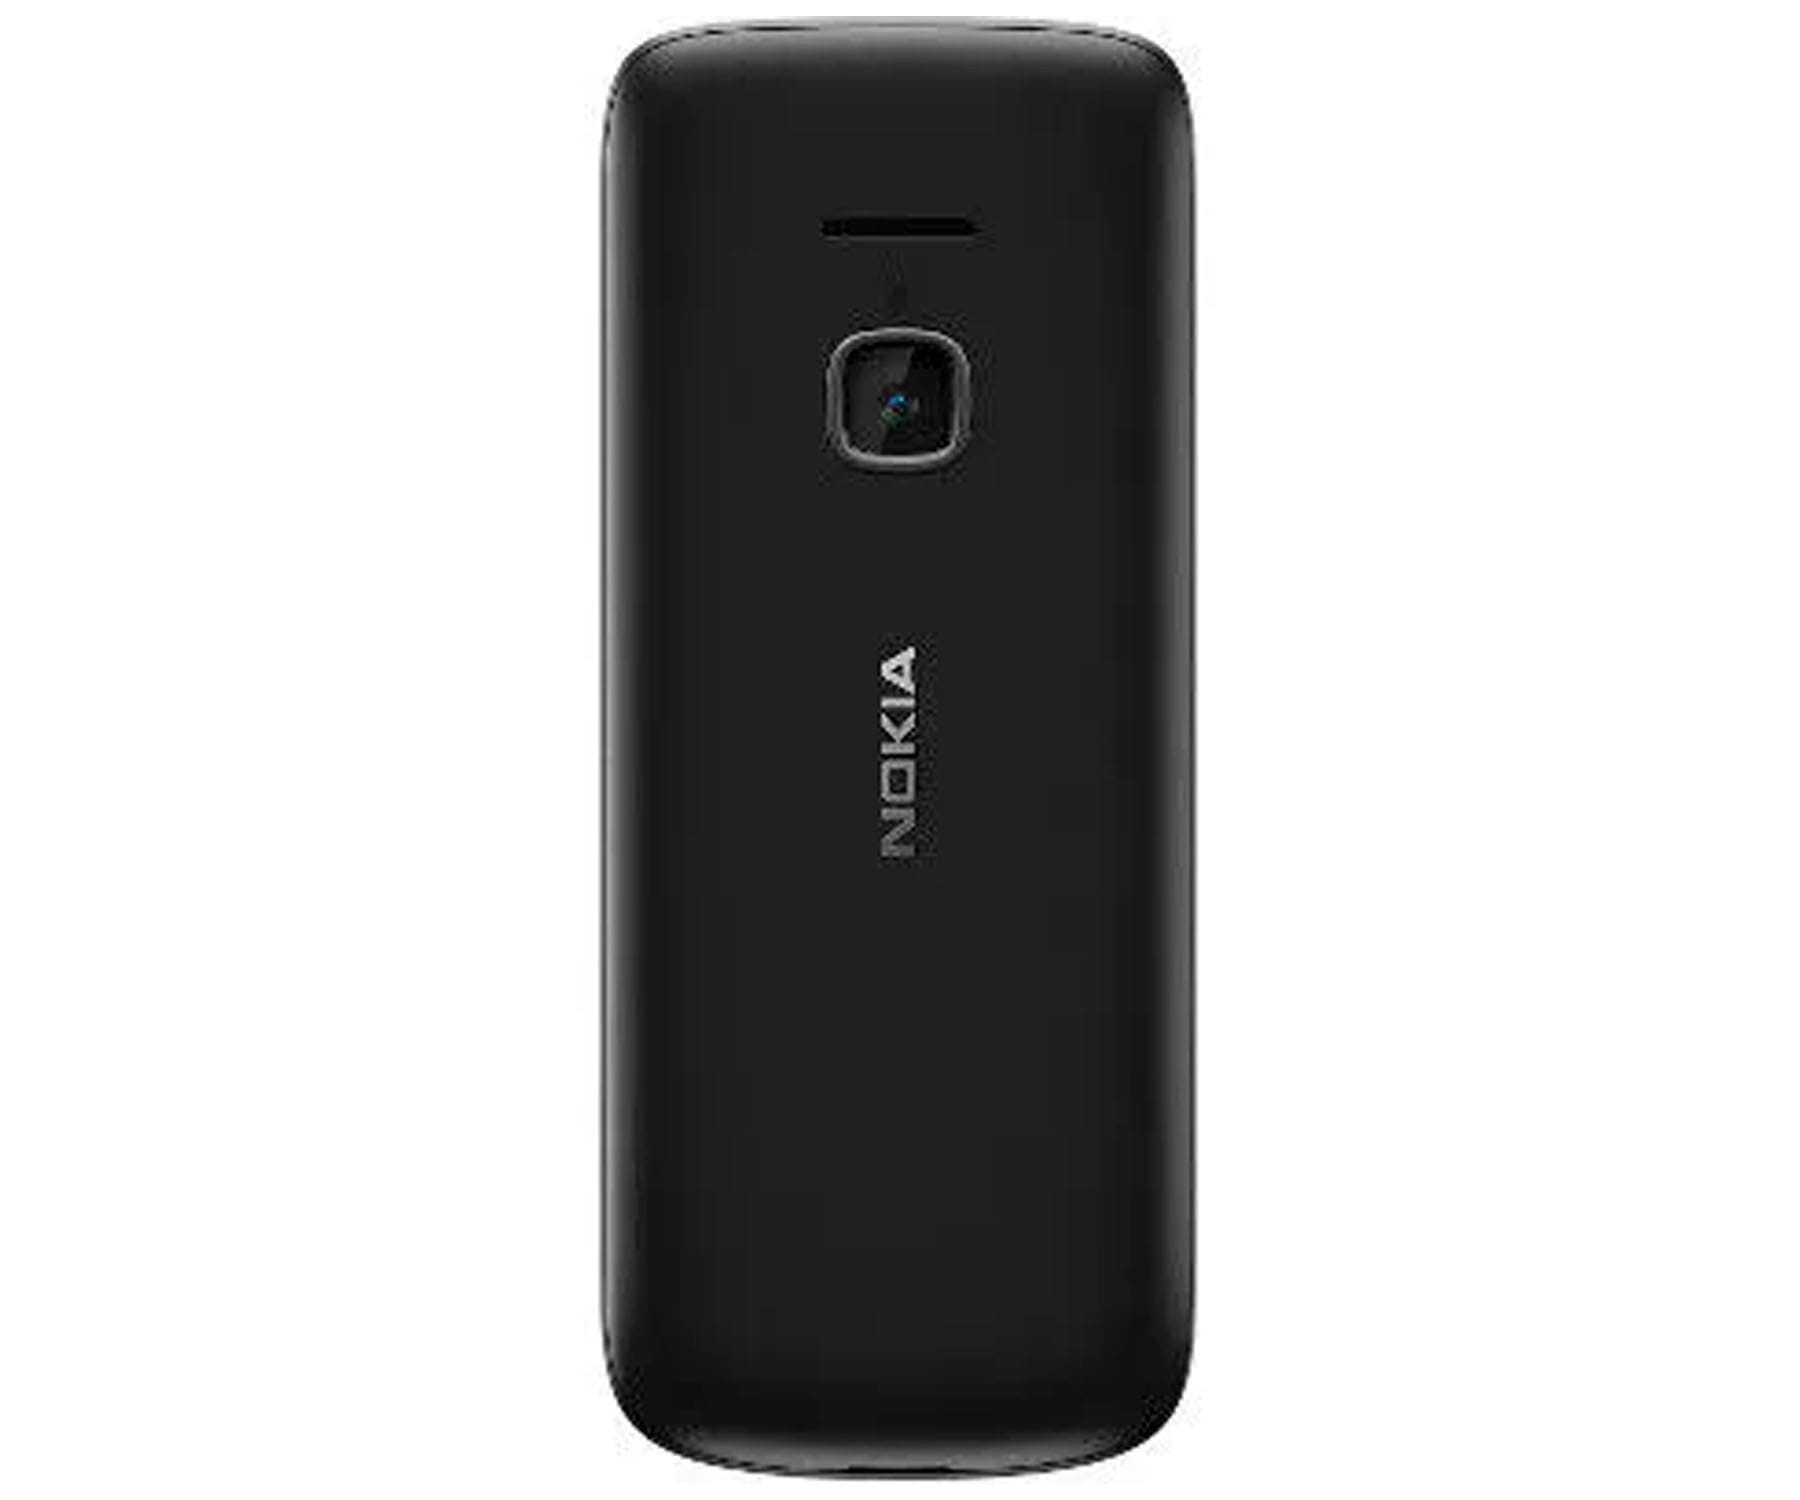 NOKIA 225 4G Dual Mobile Black phone, Sim